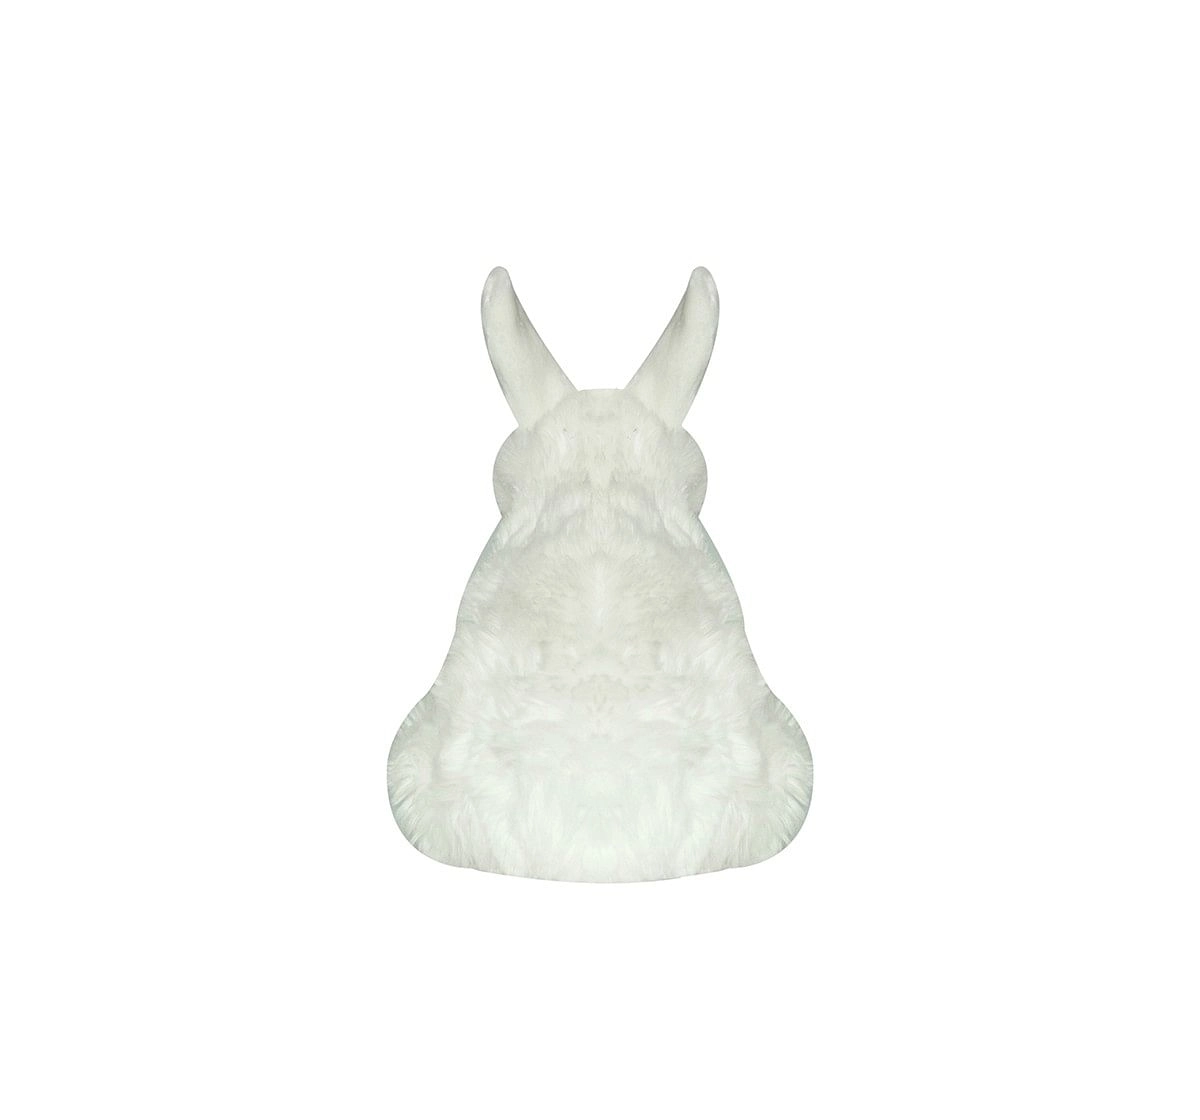 Soft Buddies Premium White Rabbit Quirky Soft Toys for Kids age 12M+ - 30.48 Cm 